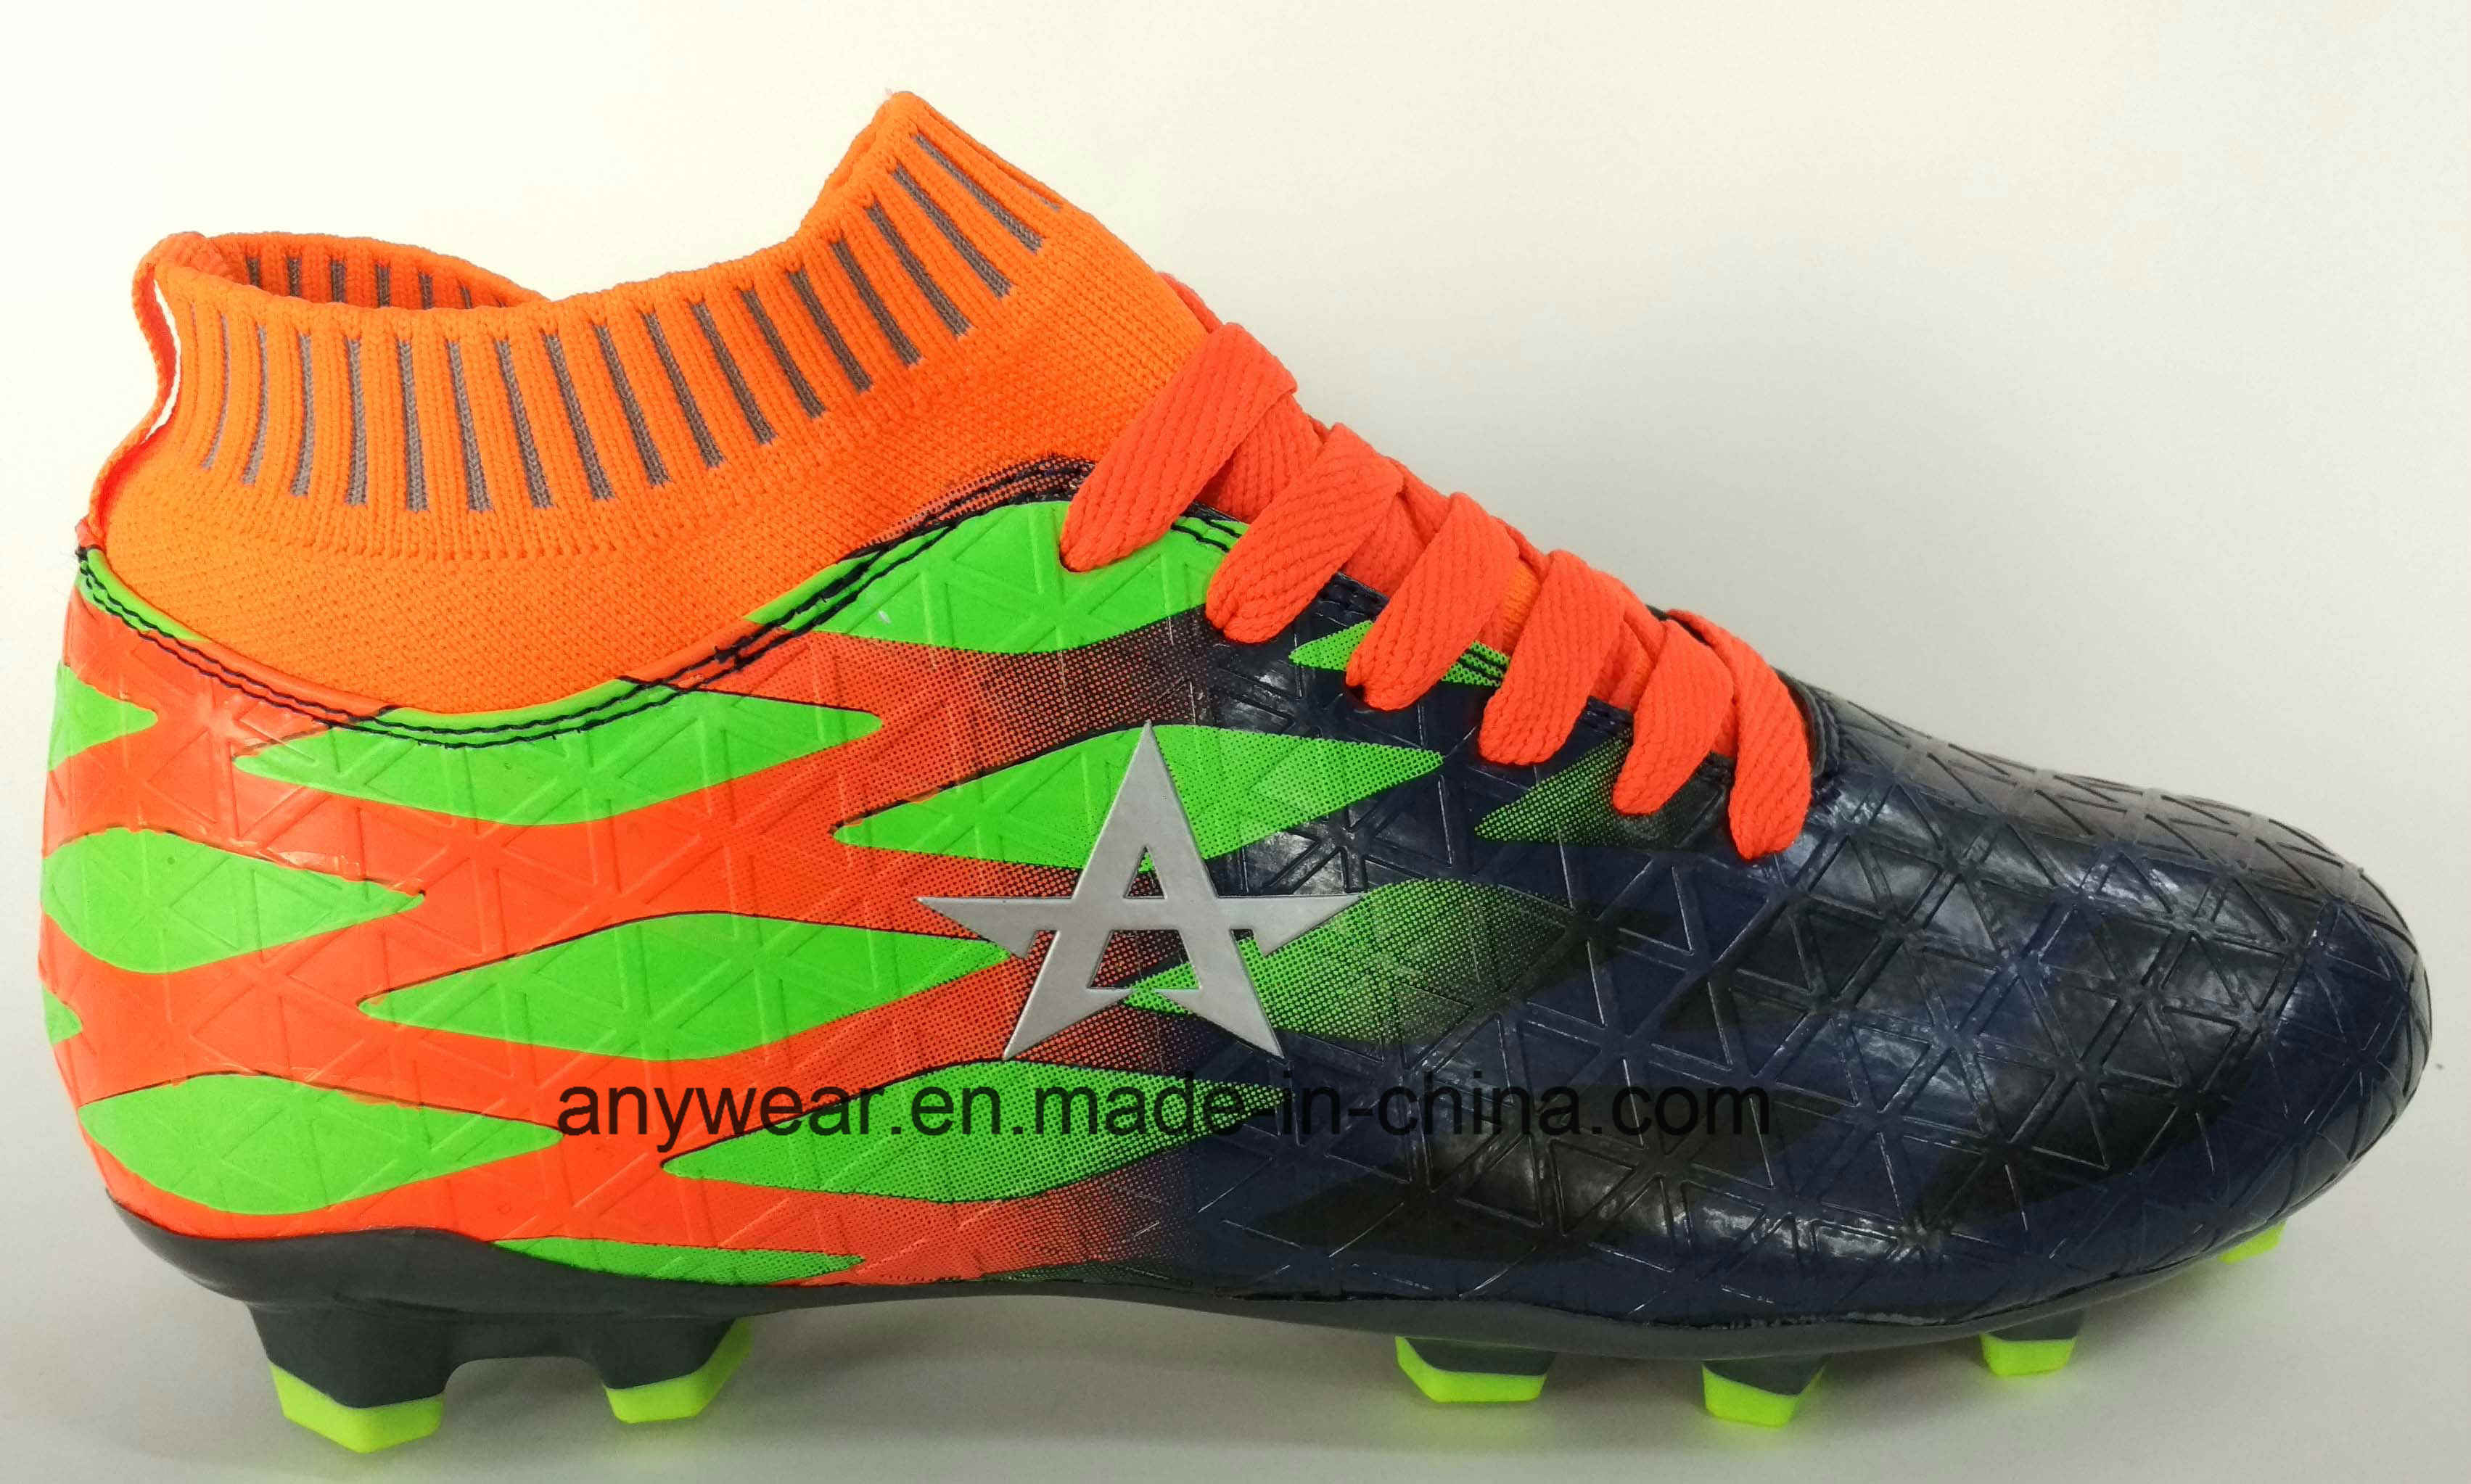 Football Footwear Flyknitting Upper Shoes Outdoor Soccer Boots (174S)